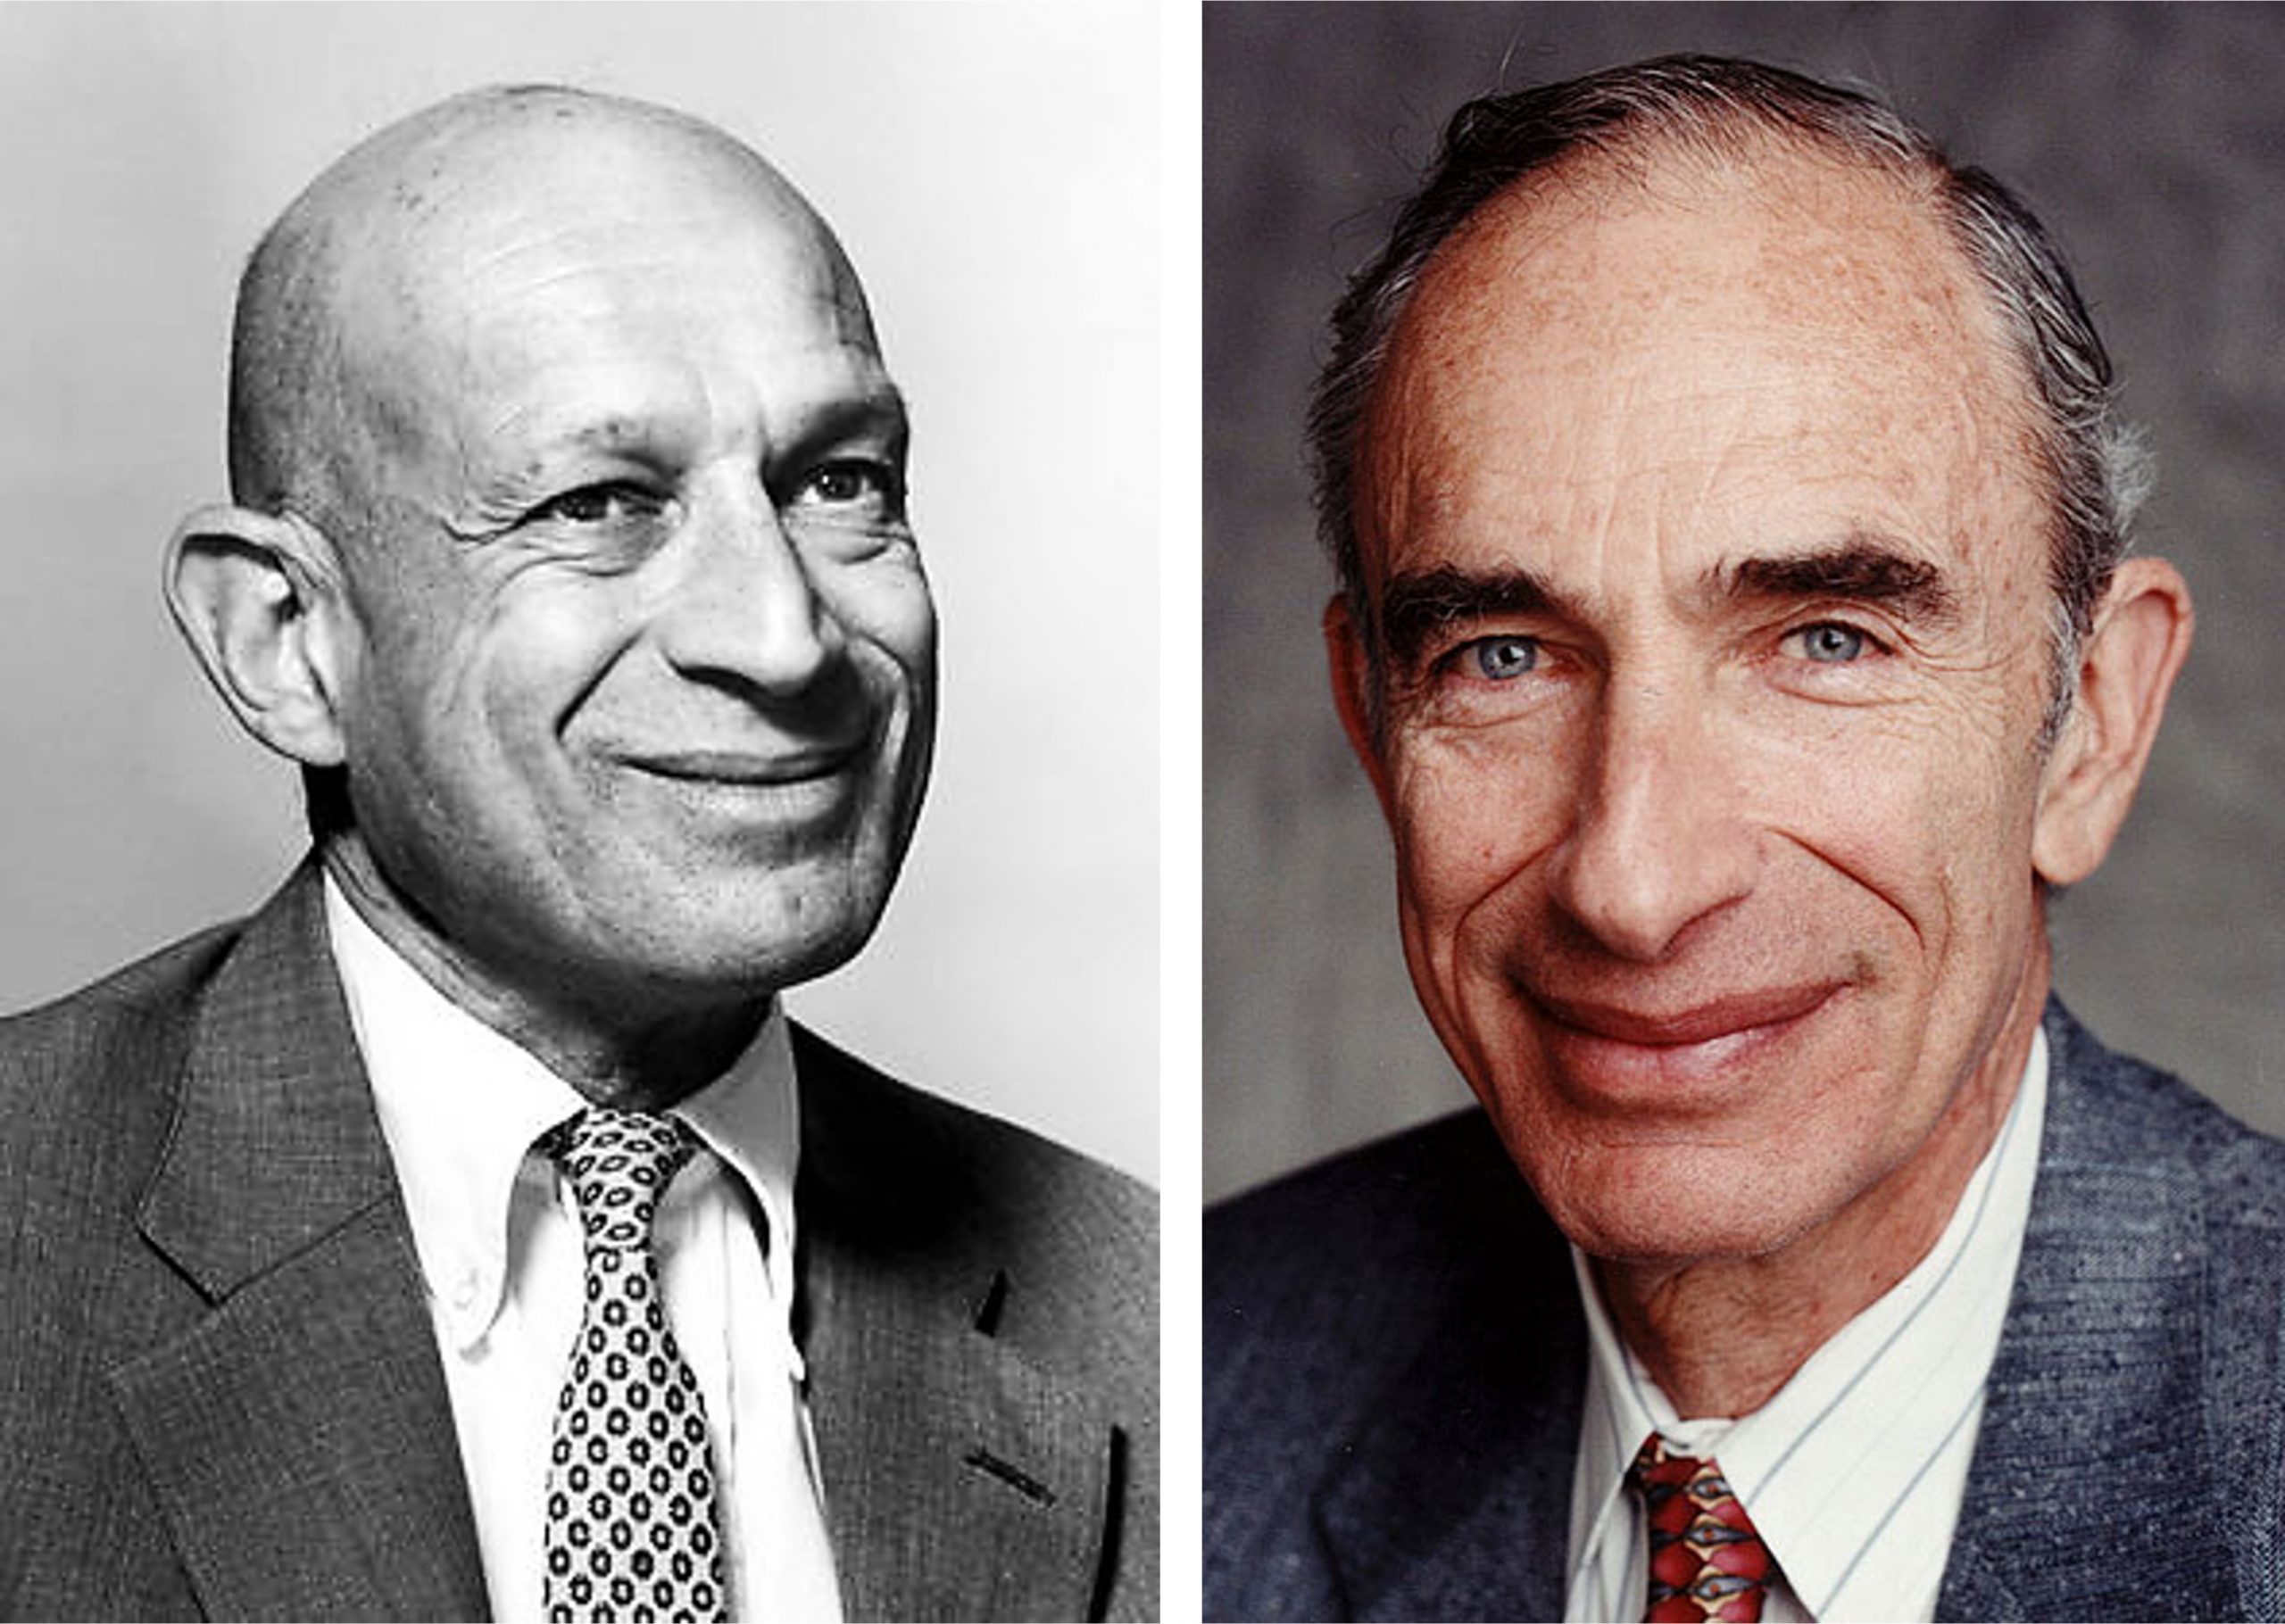 Left: Julian Simon (1932-1998), Photo courtesy University of Maryland. Source: https://economics.illinois.edu/spotlight/historical-faculty/simon-julian-l Right: Paul Ralph Ehrlich (1932-present), Credits to: Stanford University. https://news.stanford.edu/news/2009/august3/ehrlich-margalef-award-080709.html